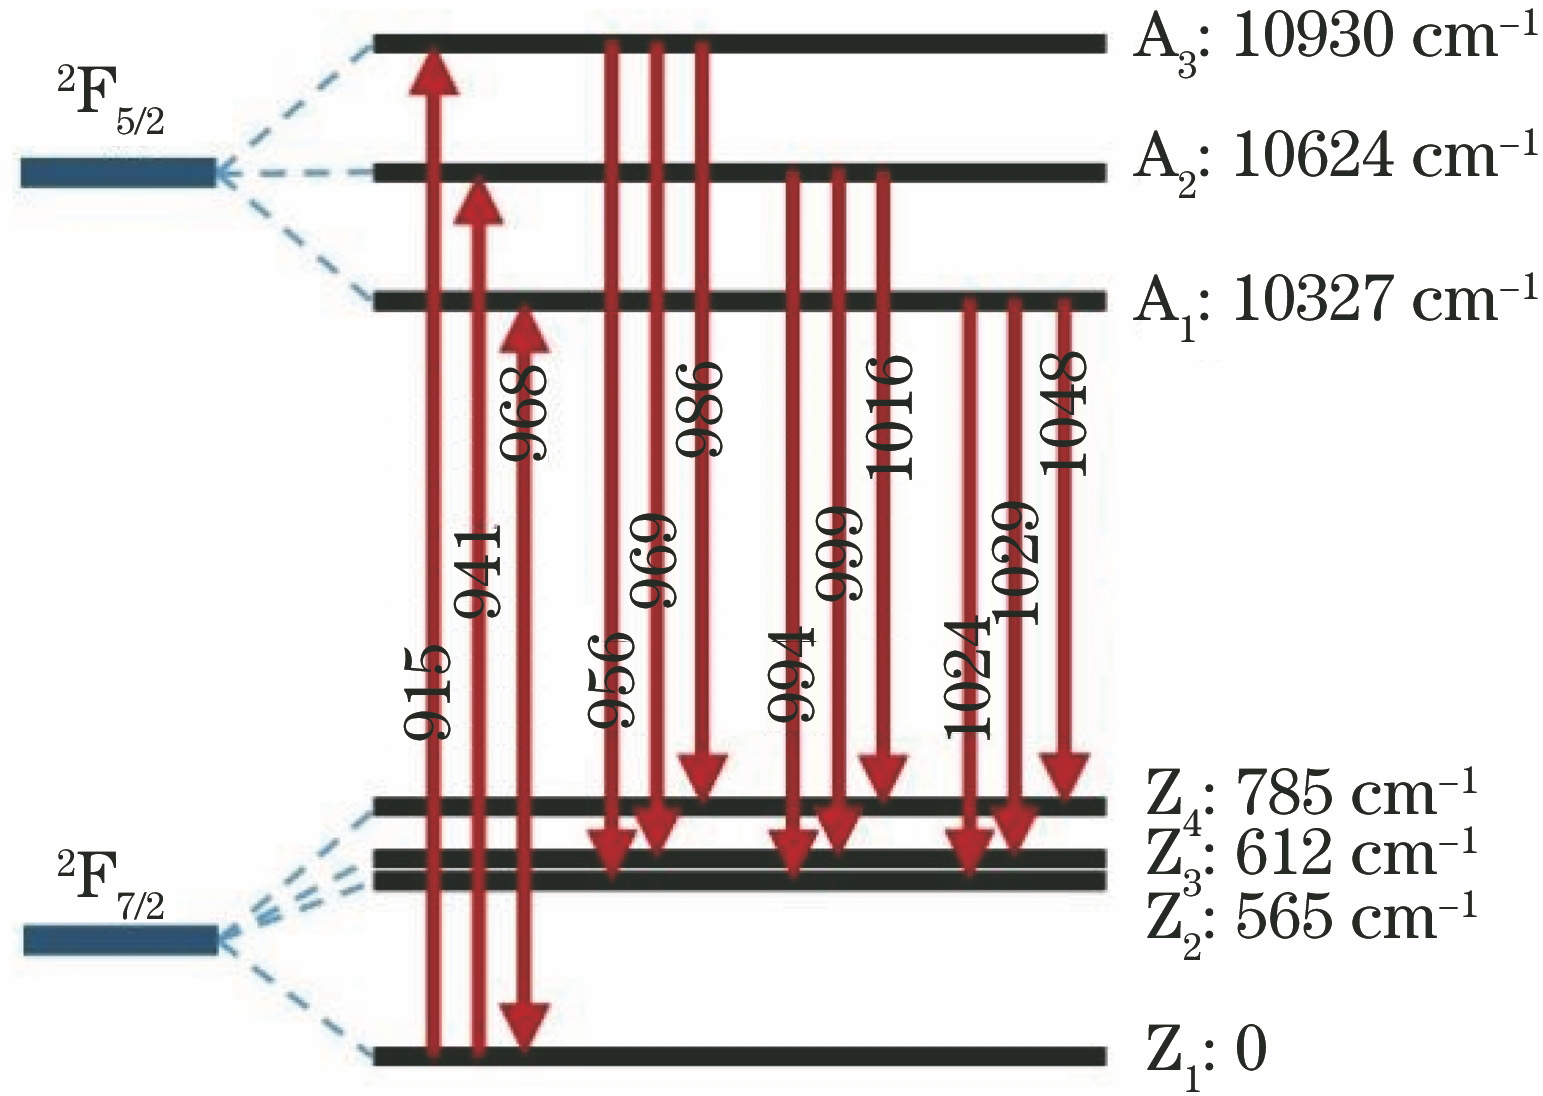 Yb∶YAG energy level diagram and corresponding spectral lines